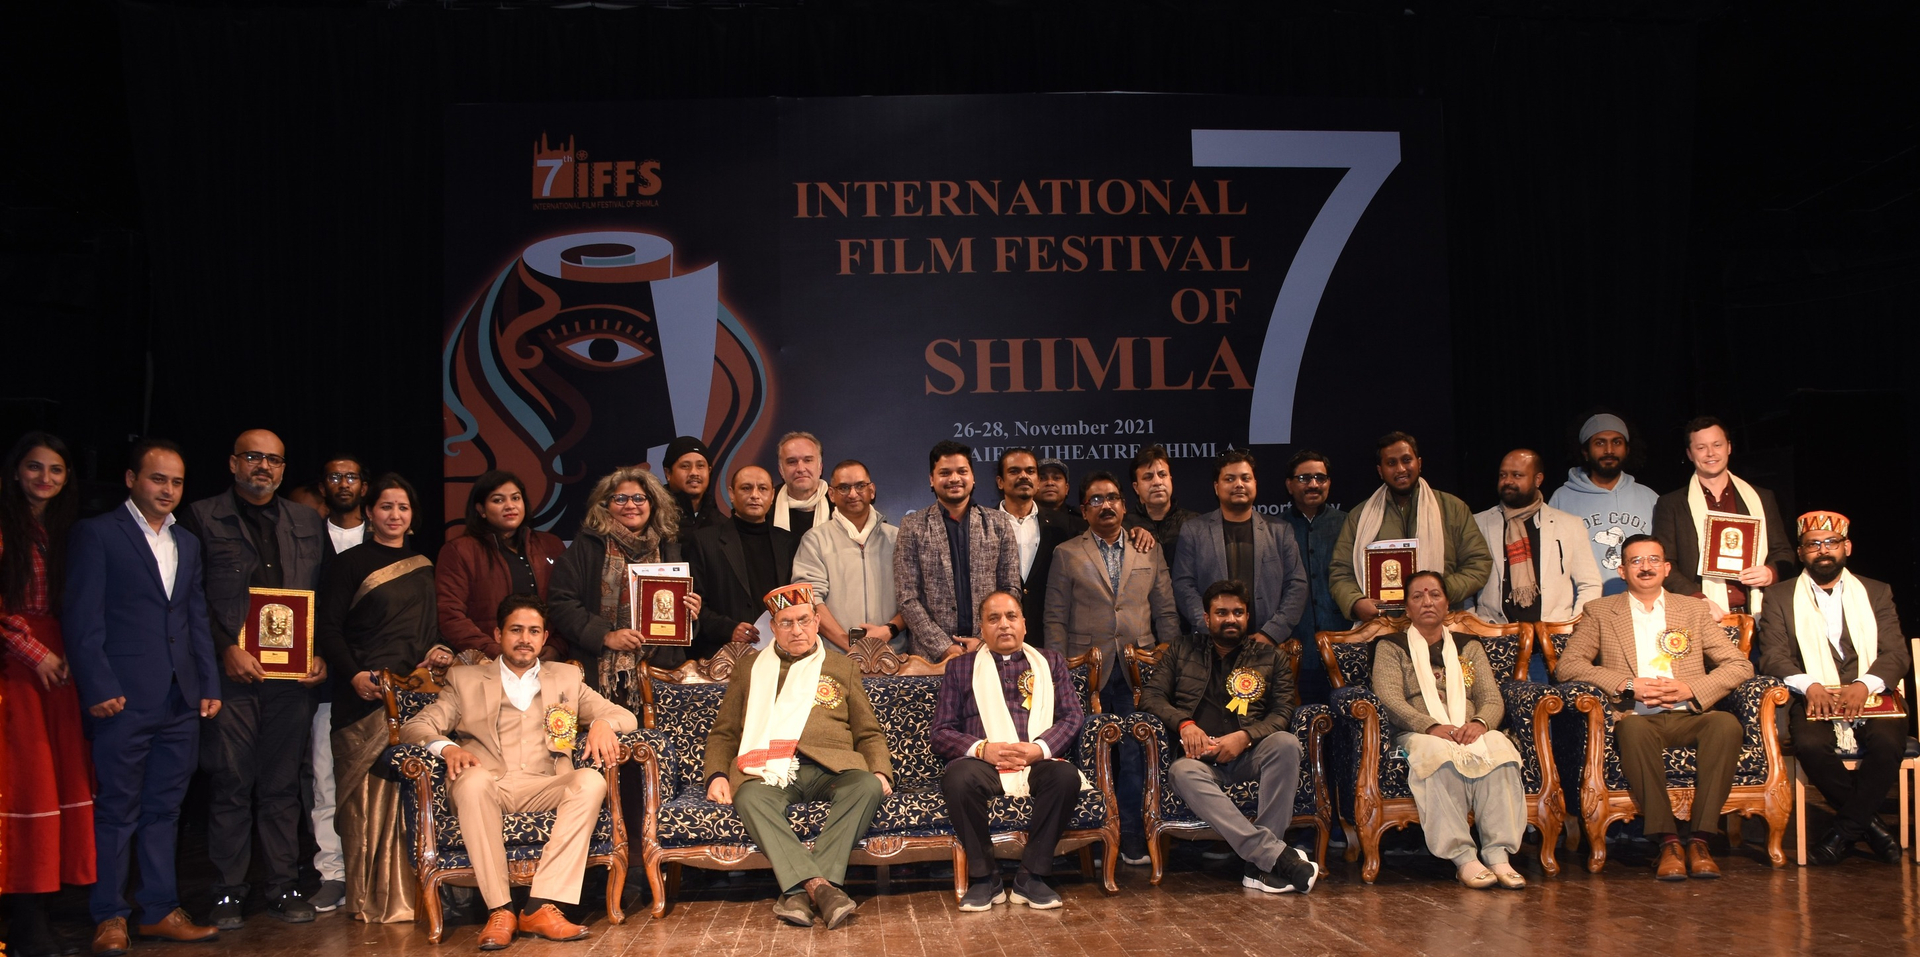 IFFS- International Film Festival of Shimla